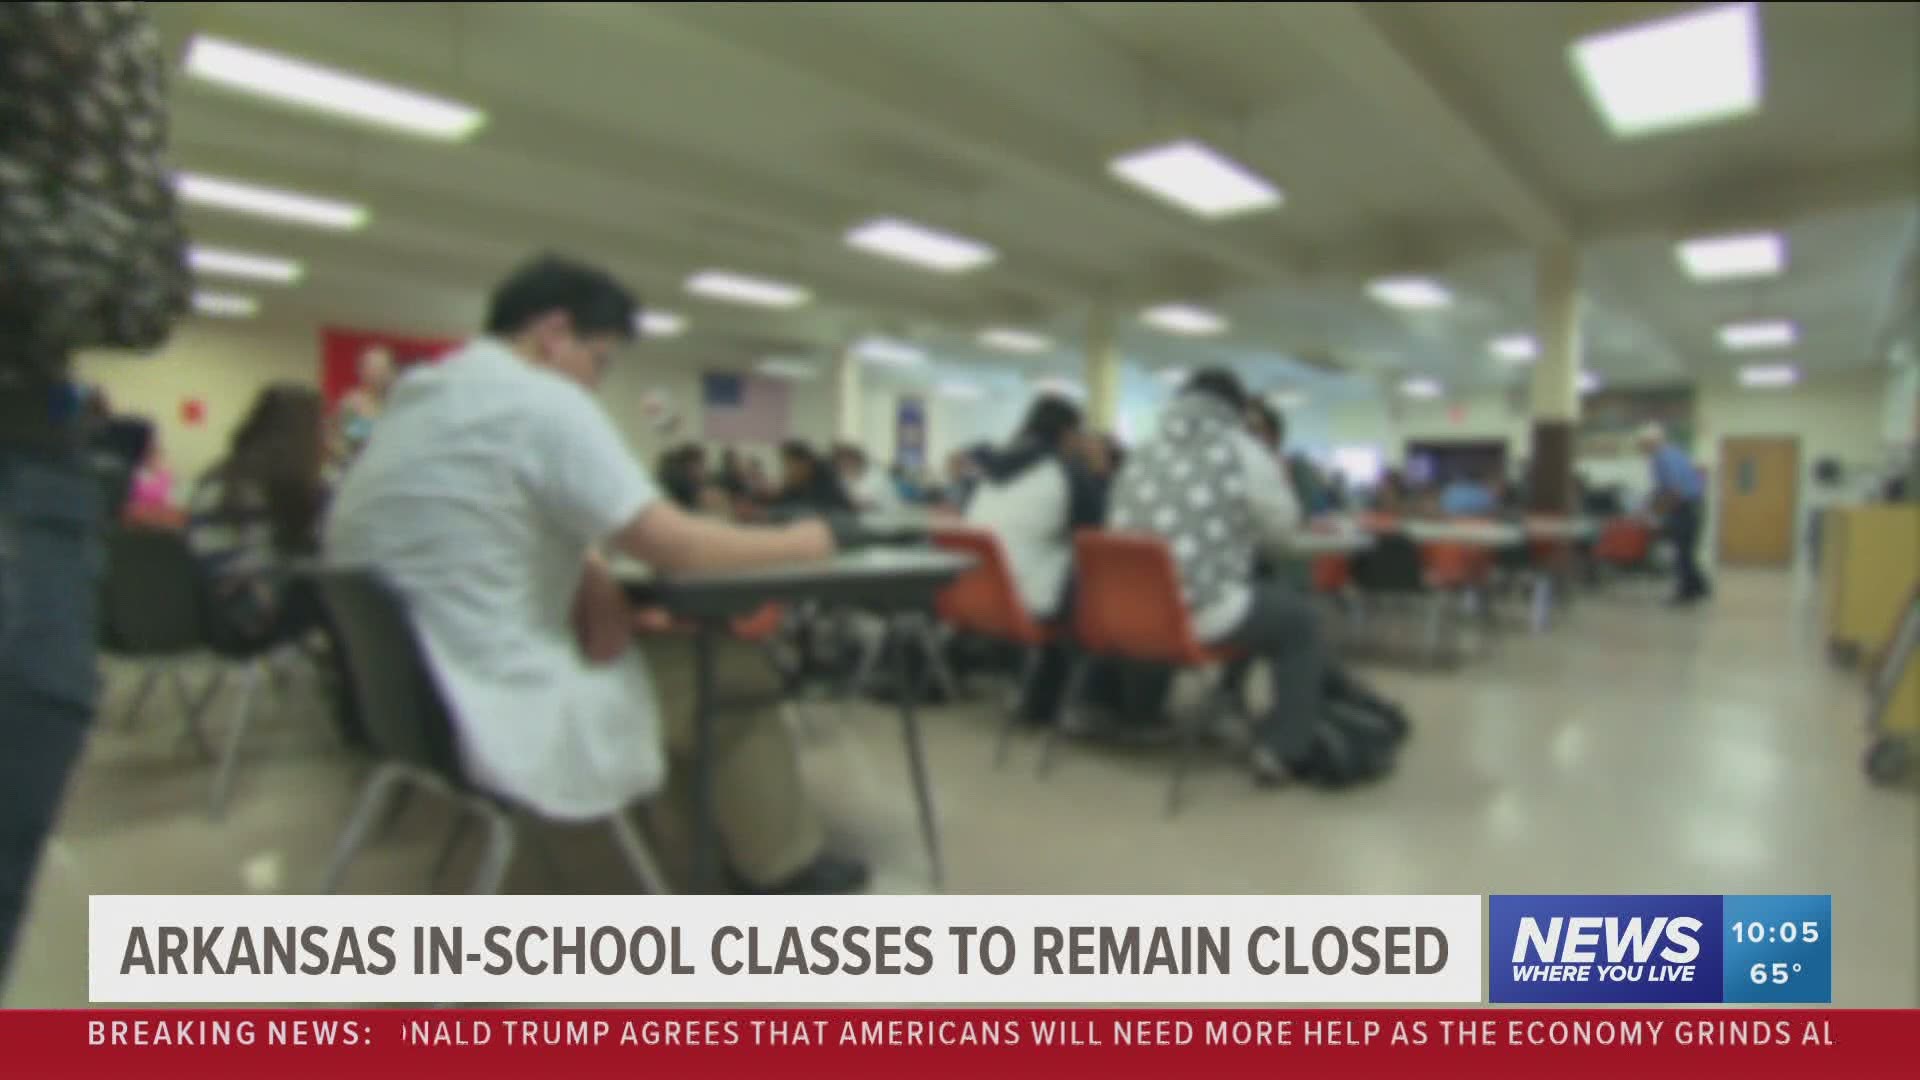 Arkansas in-school classes remain closed